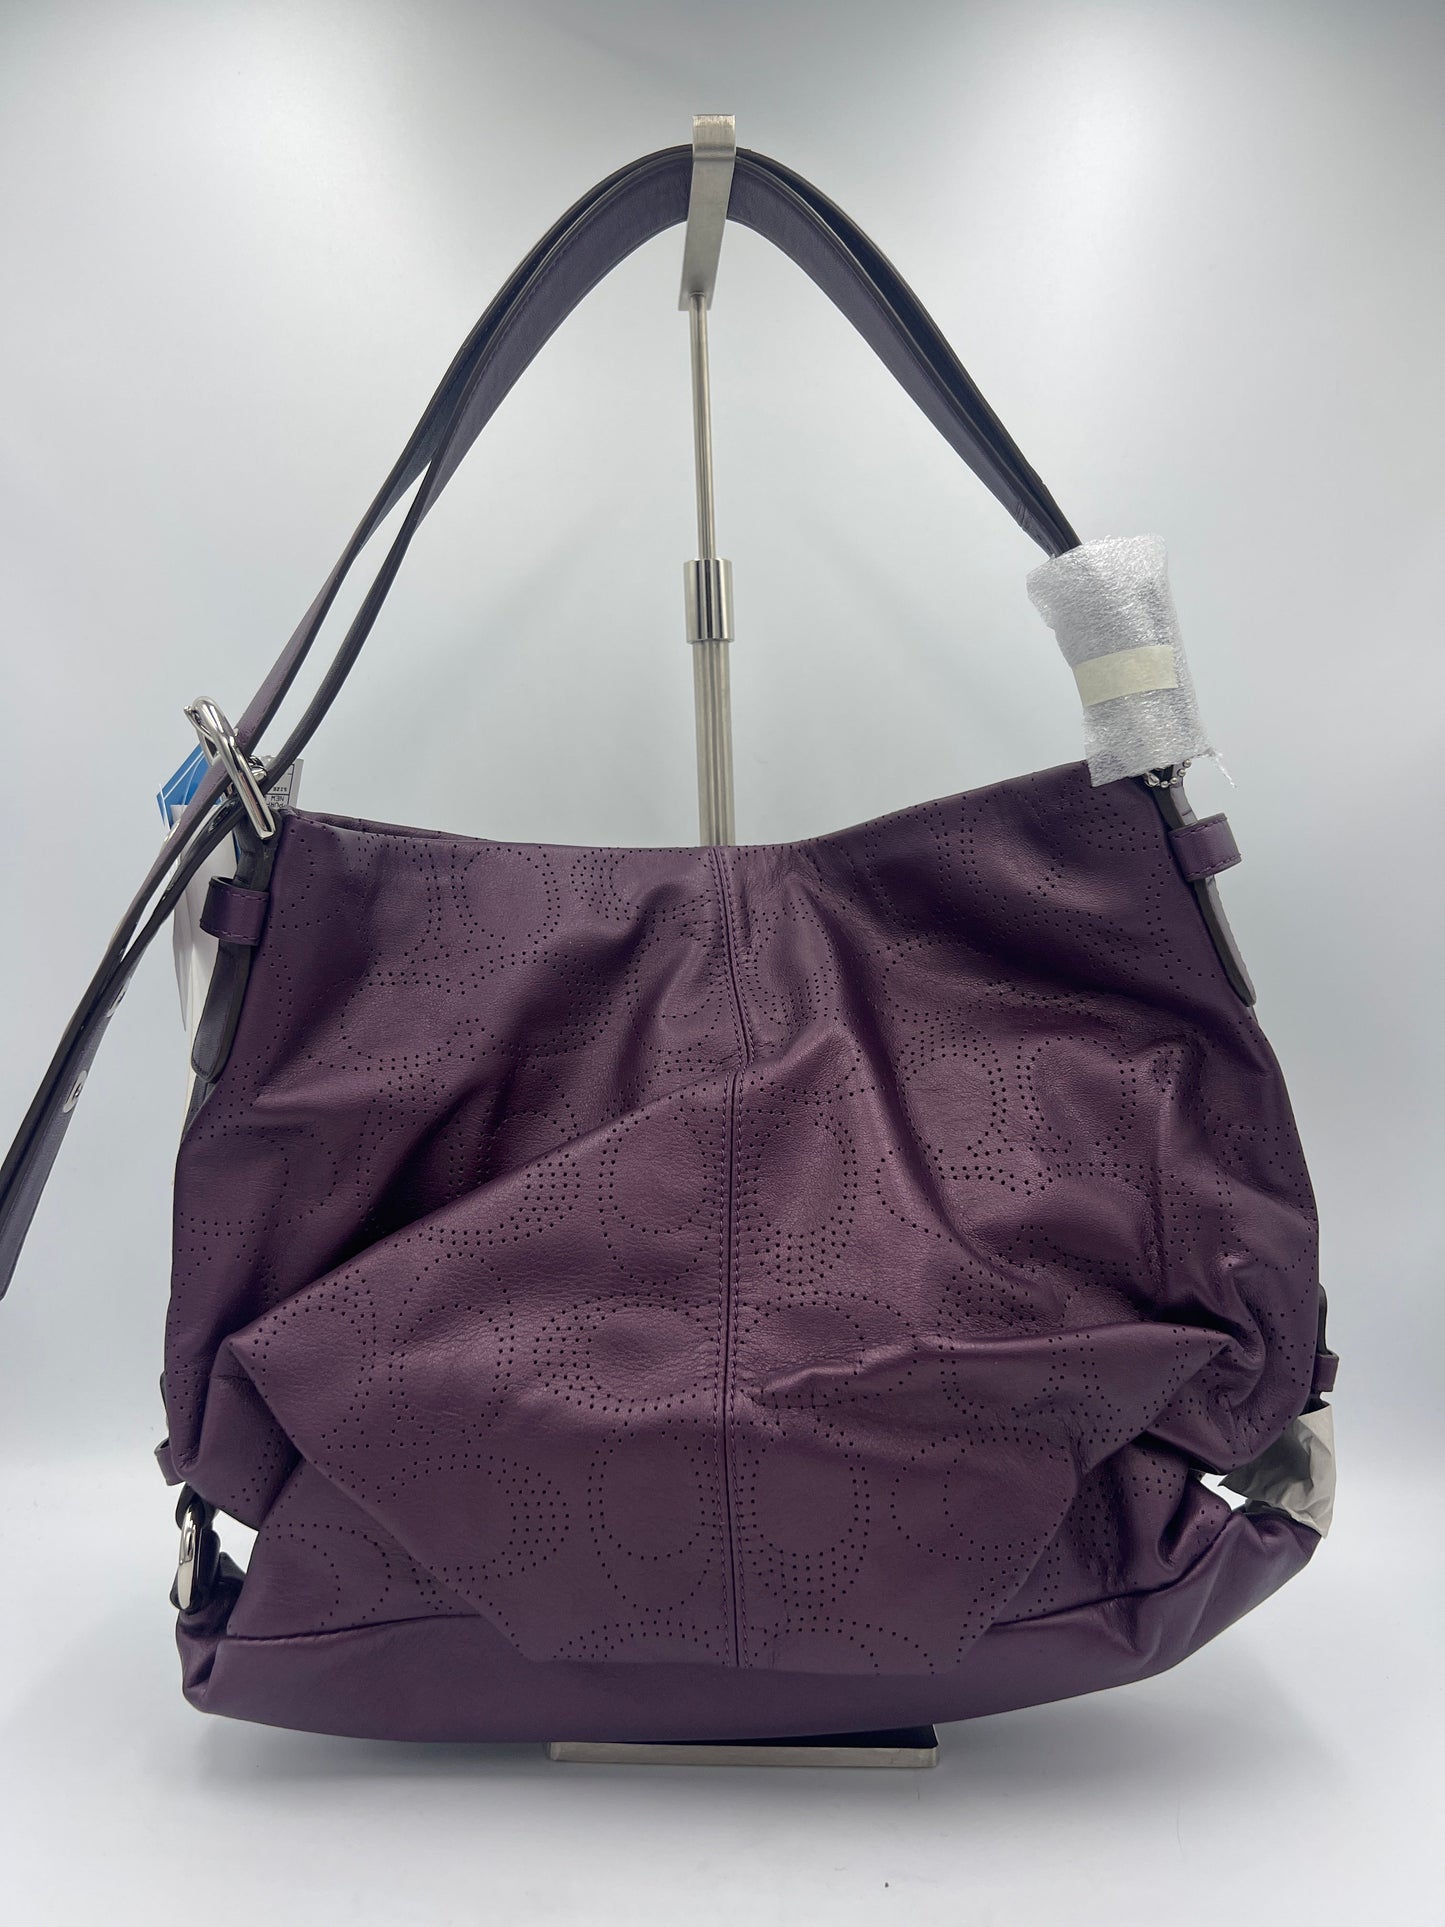 New! Handbag Designer By Coach  Size: Medium